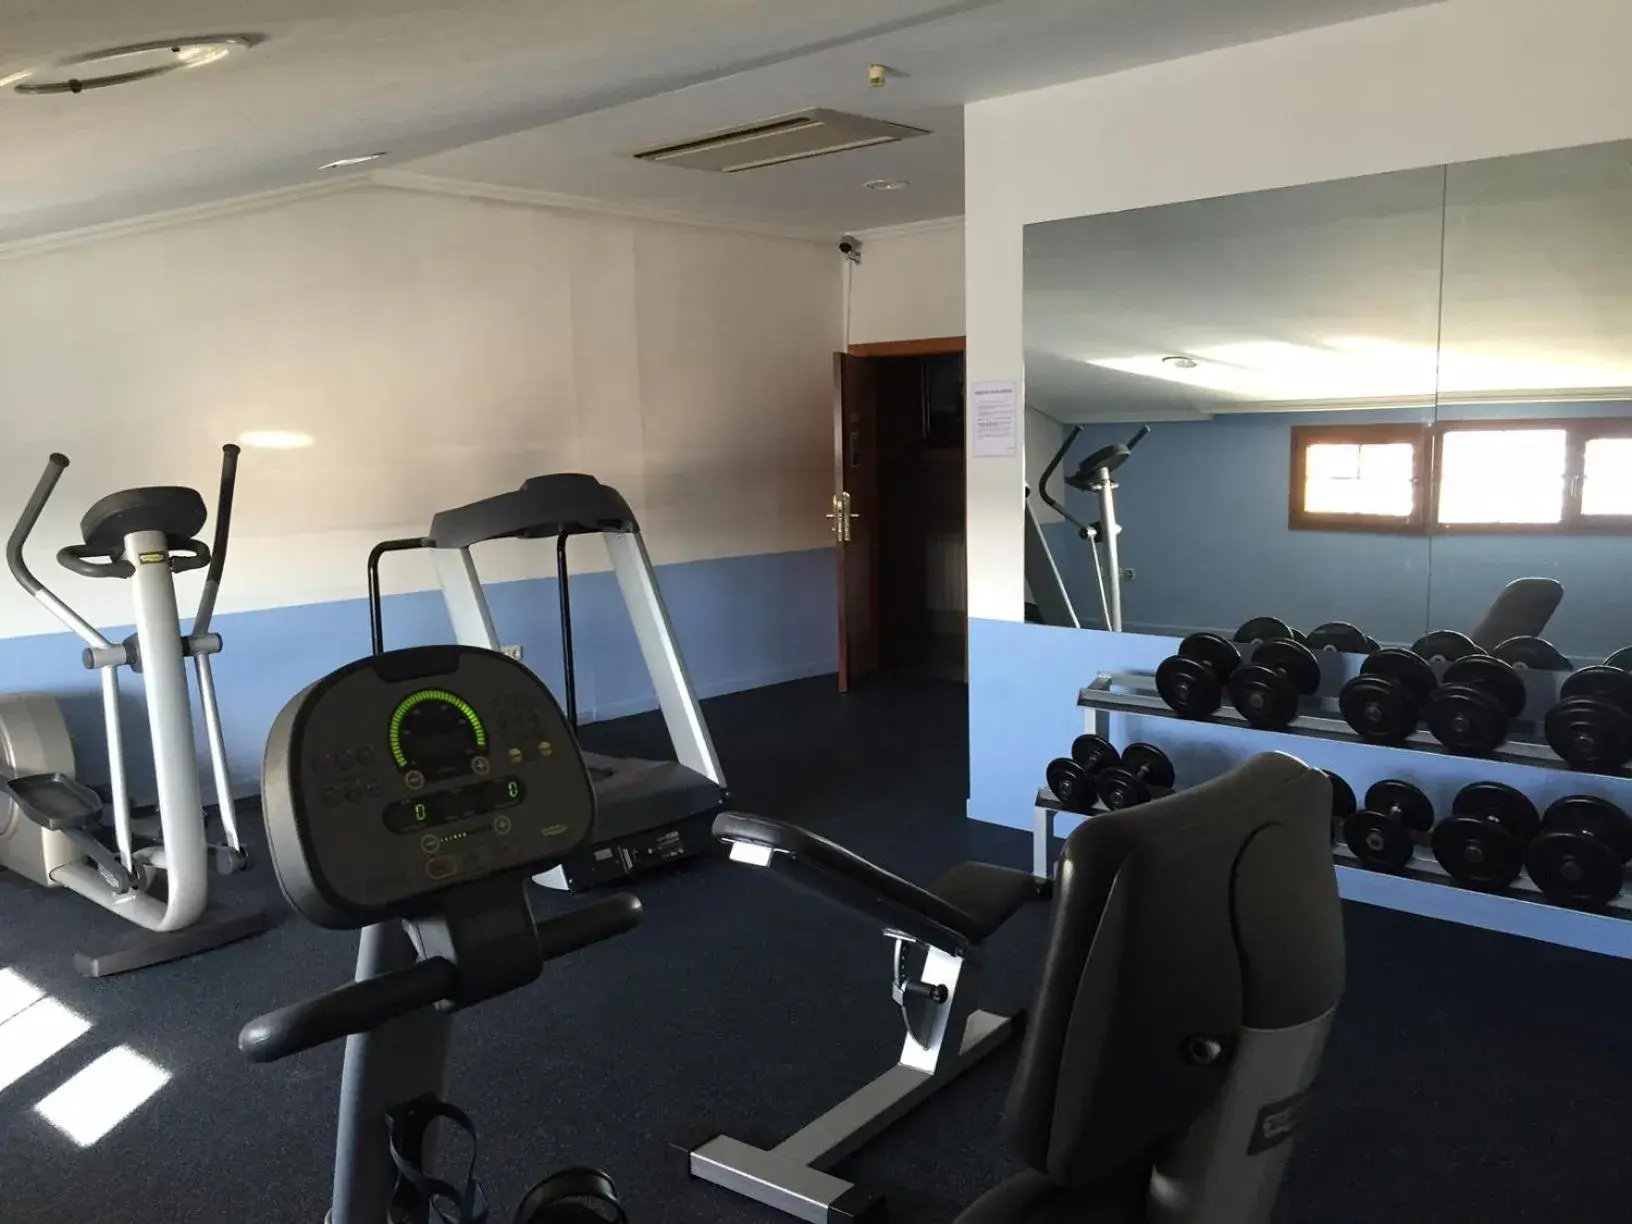 Fitness centre/facilities, Fitness Center/Facilities in Carlos I Toledo